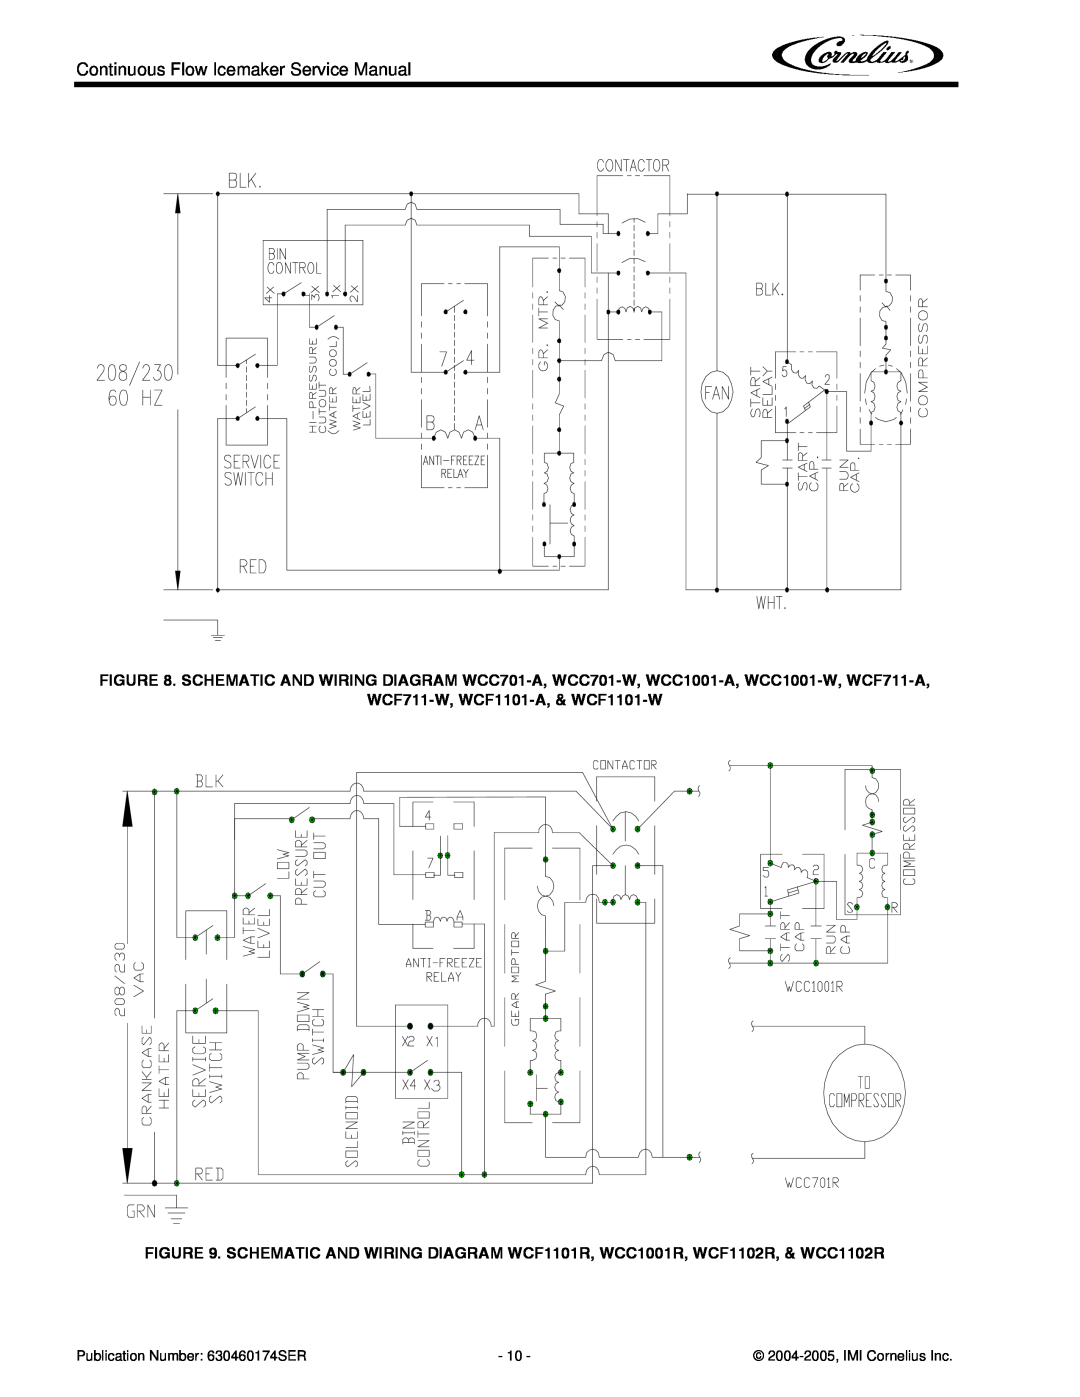 Cornelius 1000 service manual WCF711-W, WCF1101-A,& WCF1101-W 